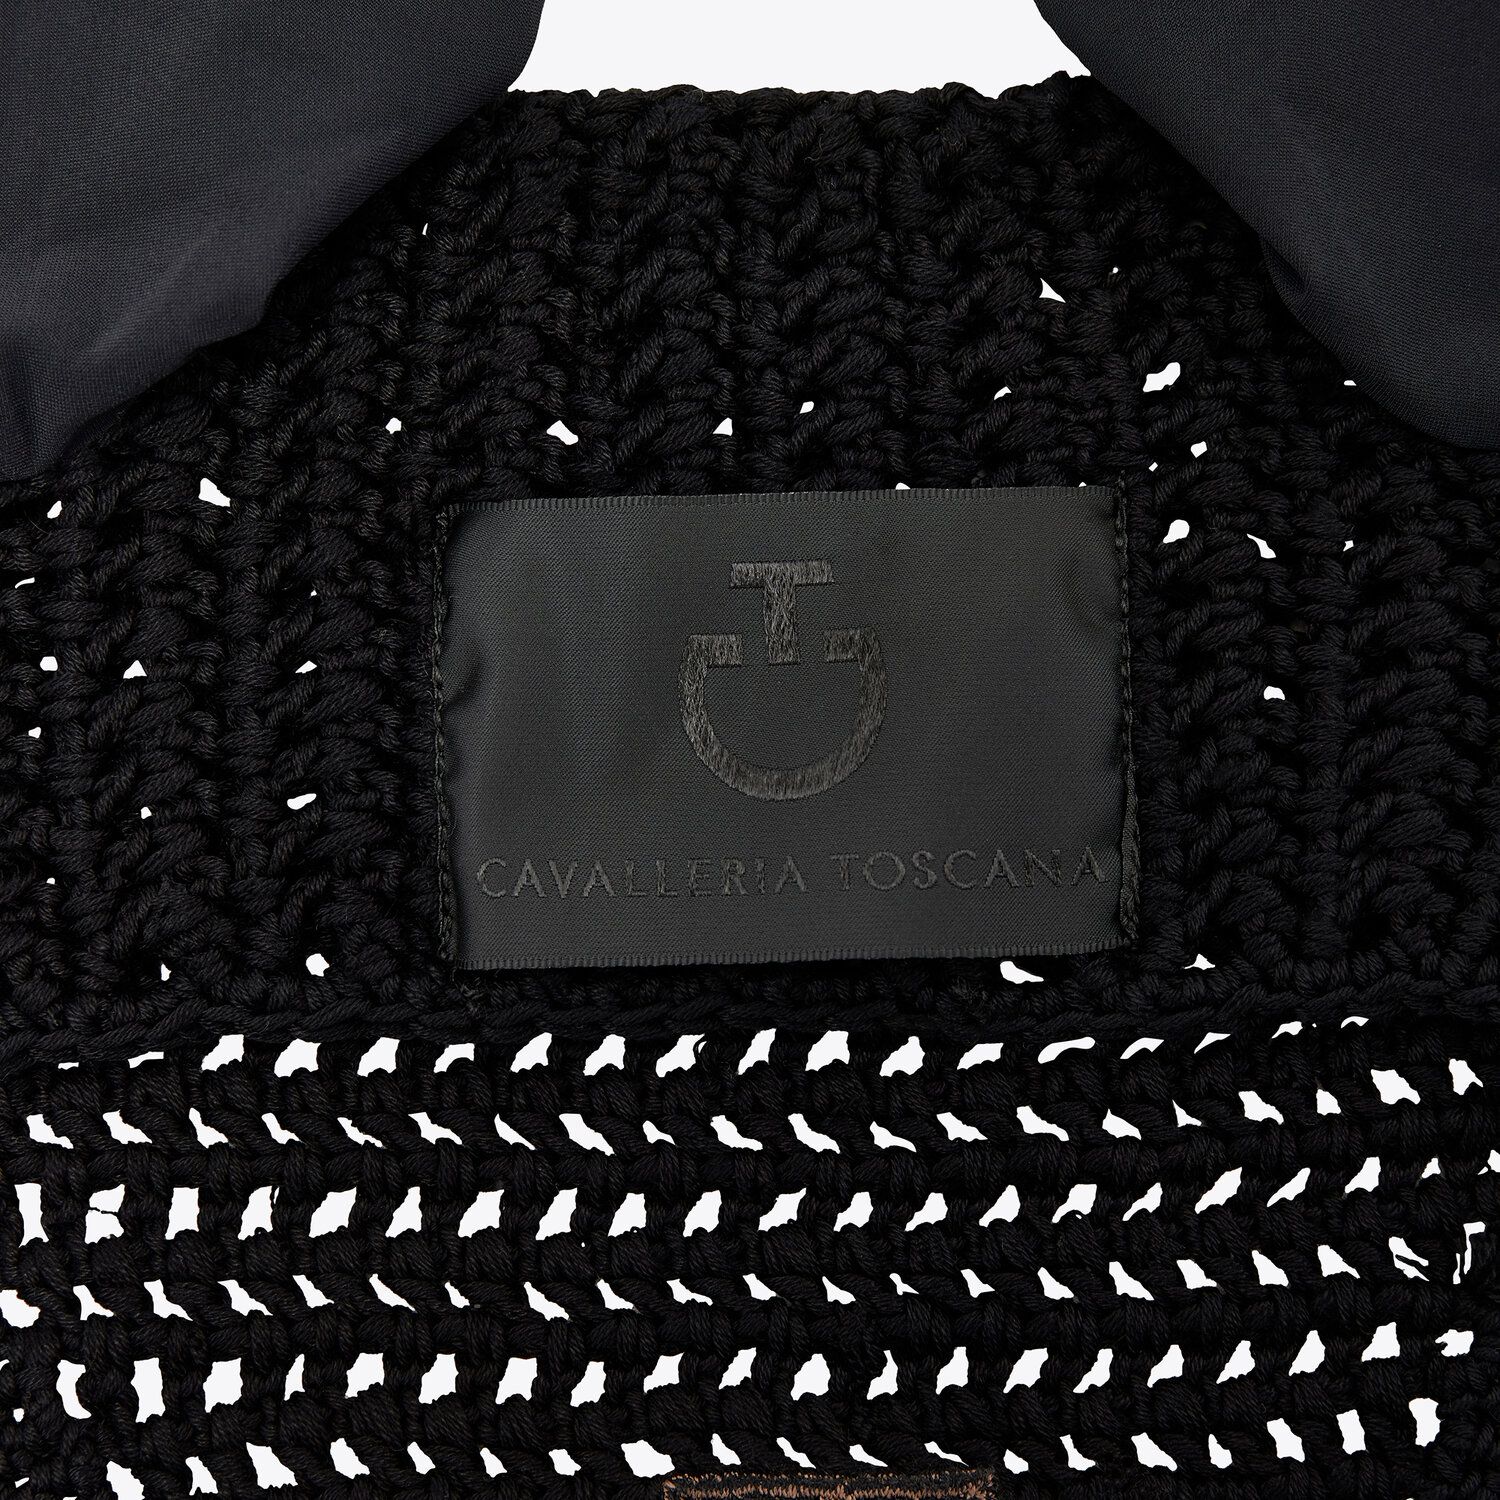 Cavalleria Toscana Lightweight crochet earnet BLACK/TOFFEE BROWN-3